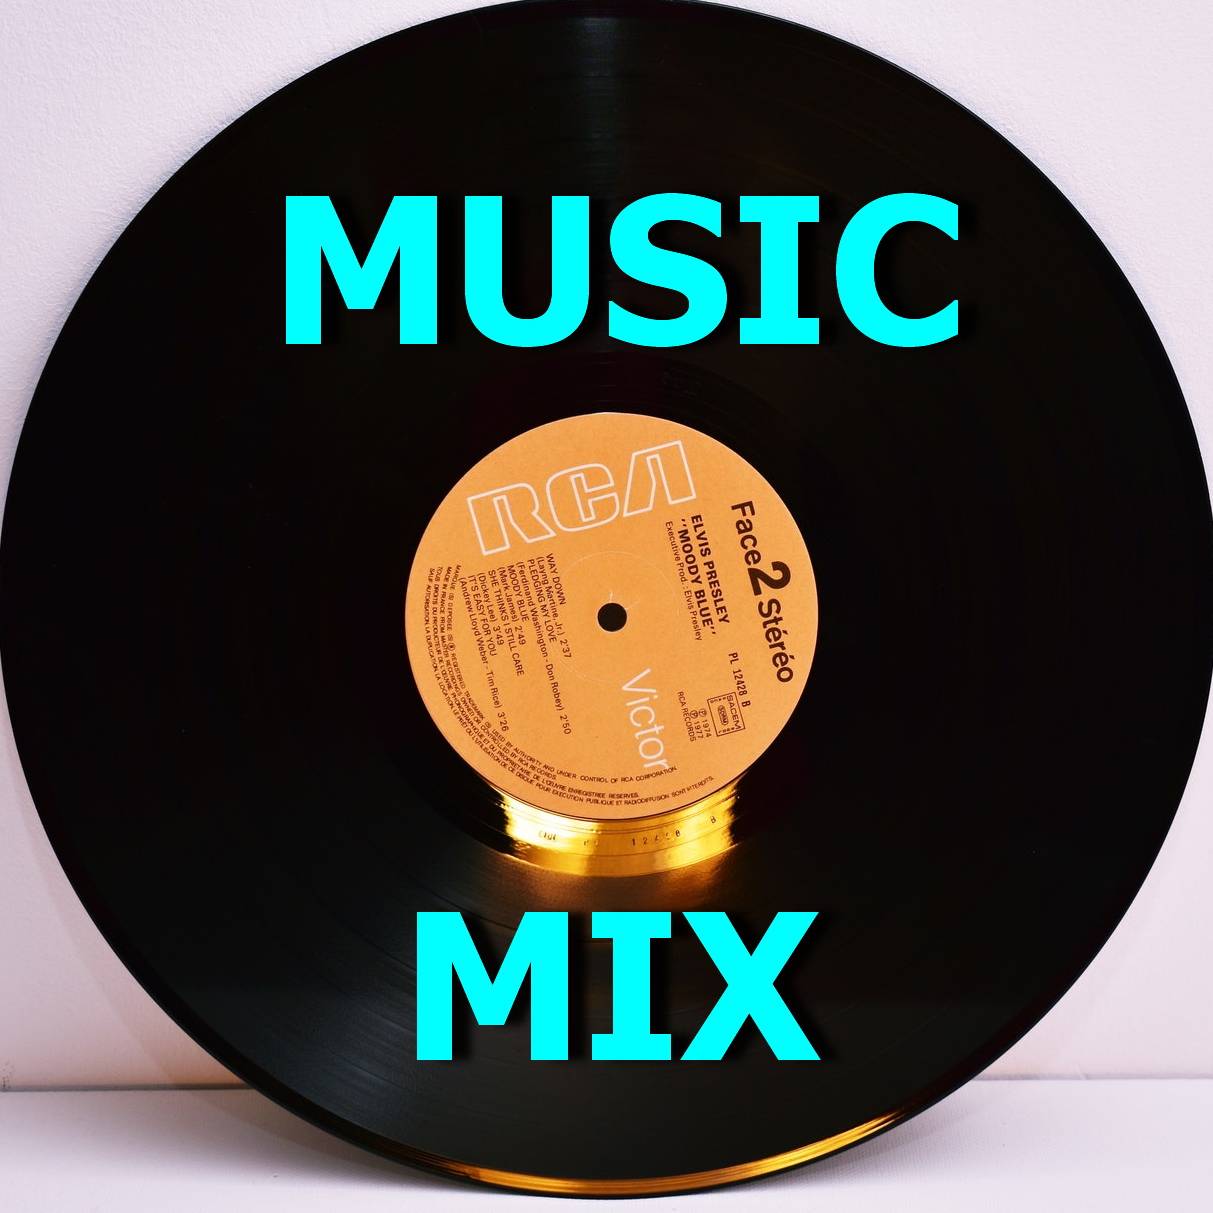 Enigma - Sadeness (DJ Nik Remix 2022). CJ Borika Insomnia Original Mix. Rastafair Music. Nik remix